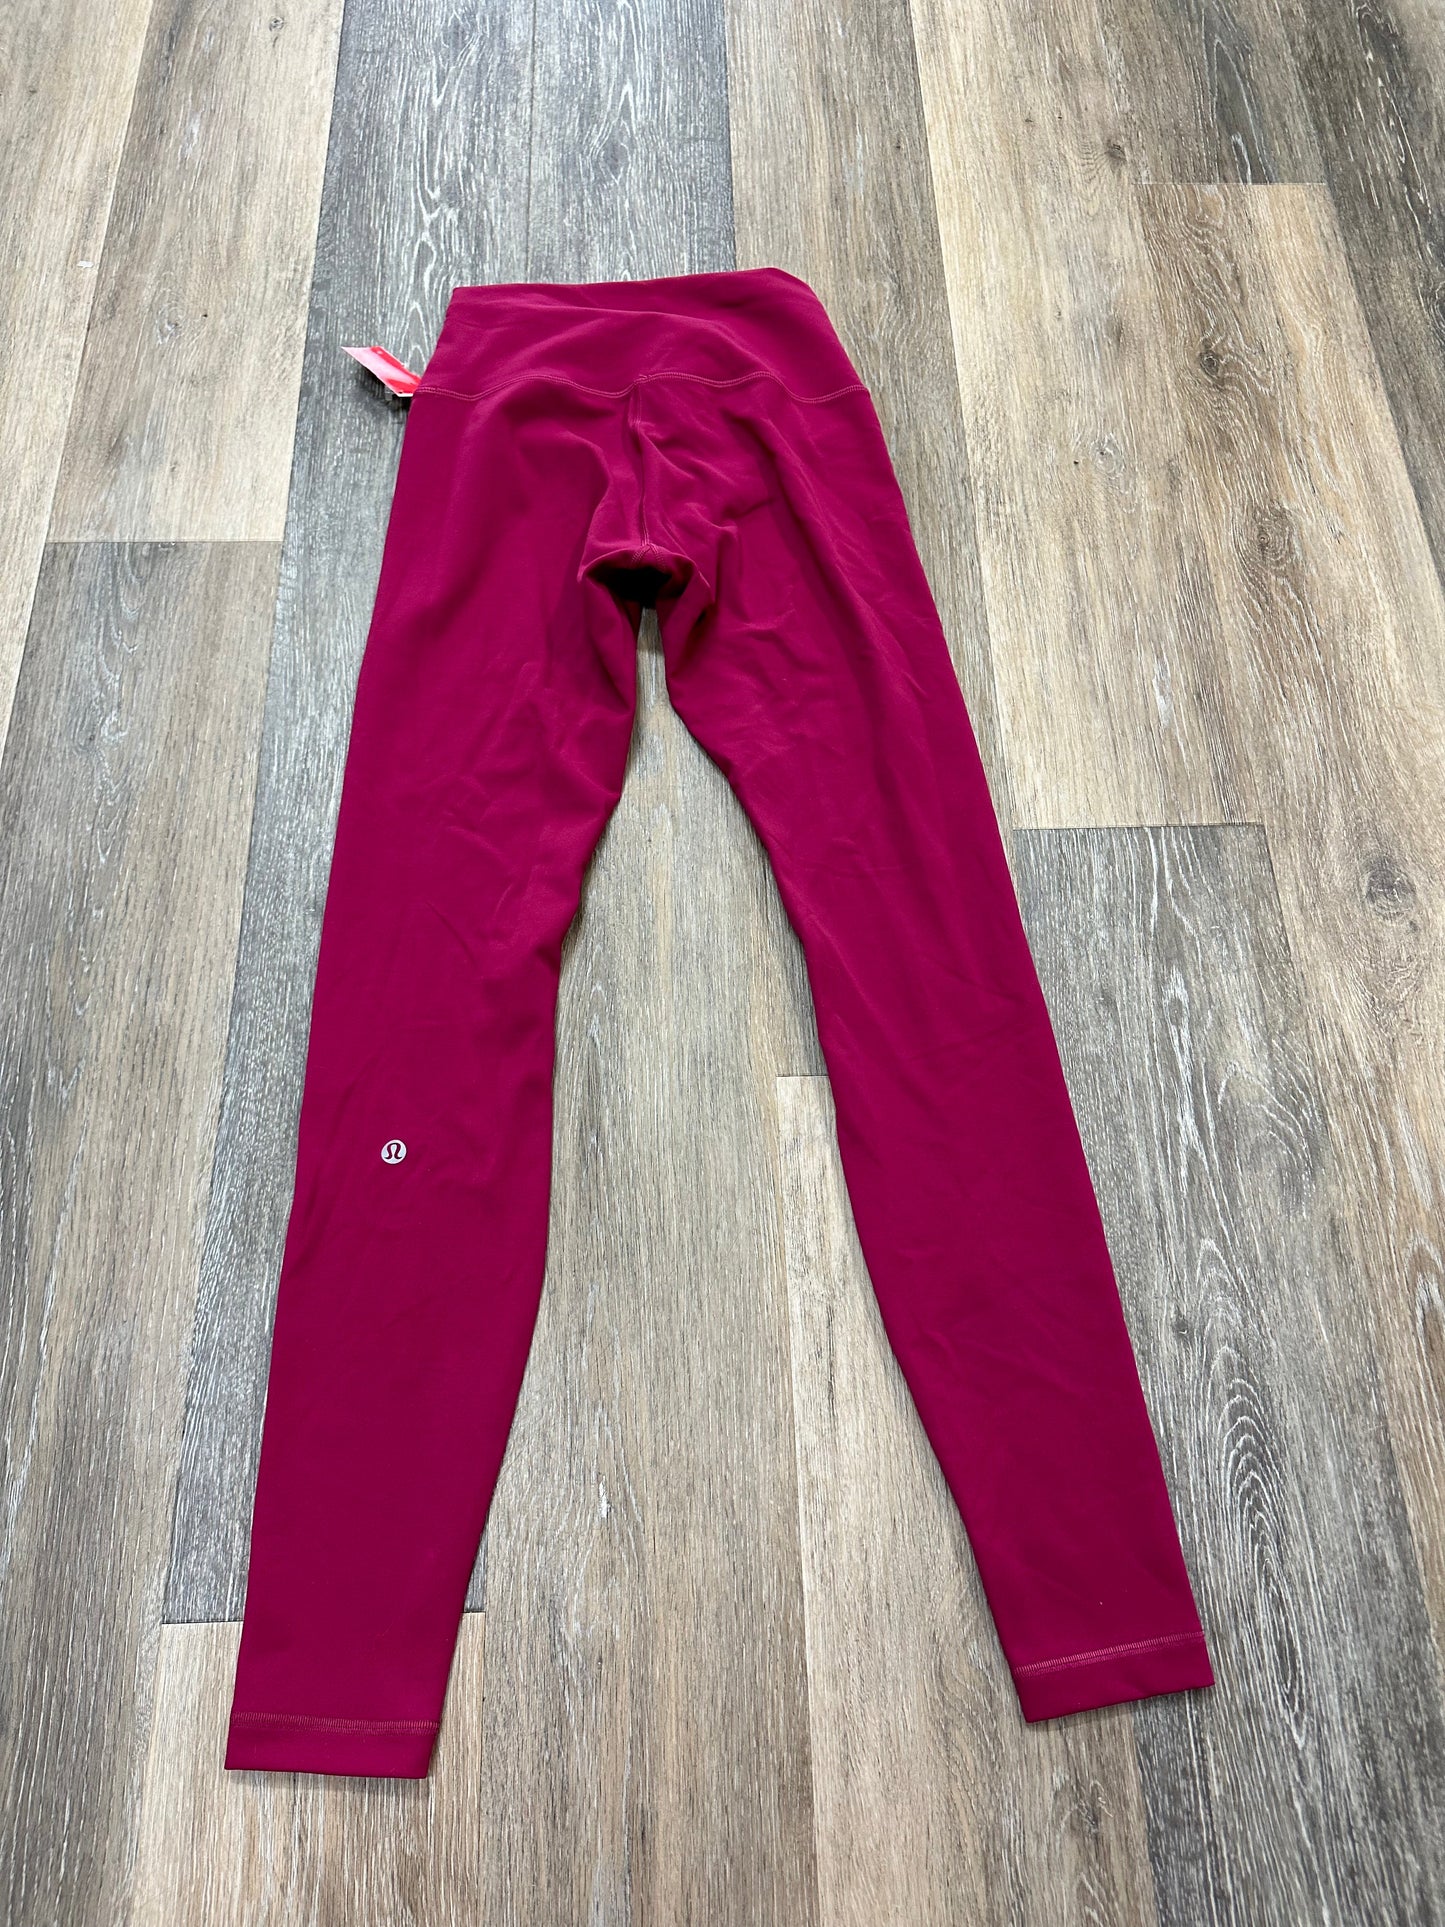 Pink Athletic Pants Lululemon, Size 6